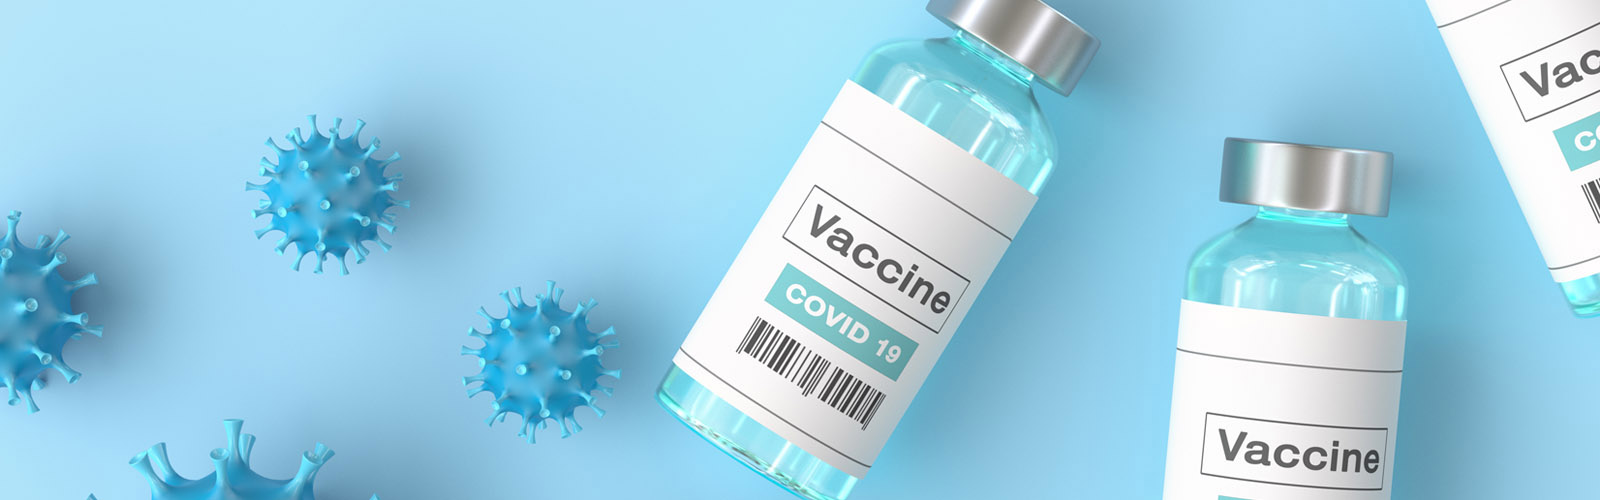 Vaccine vials for COVID-19 virus